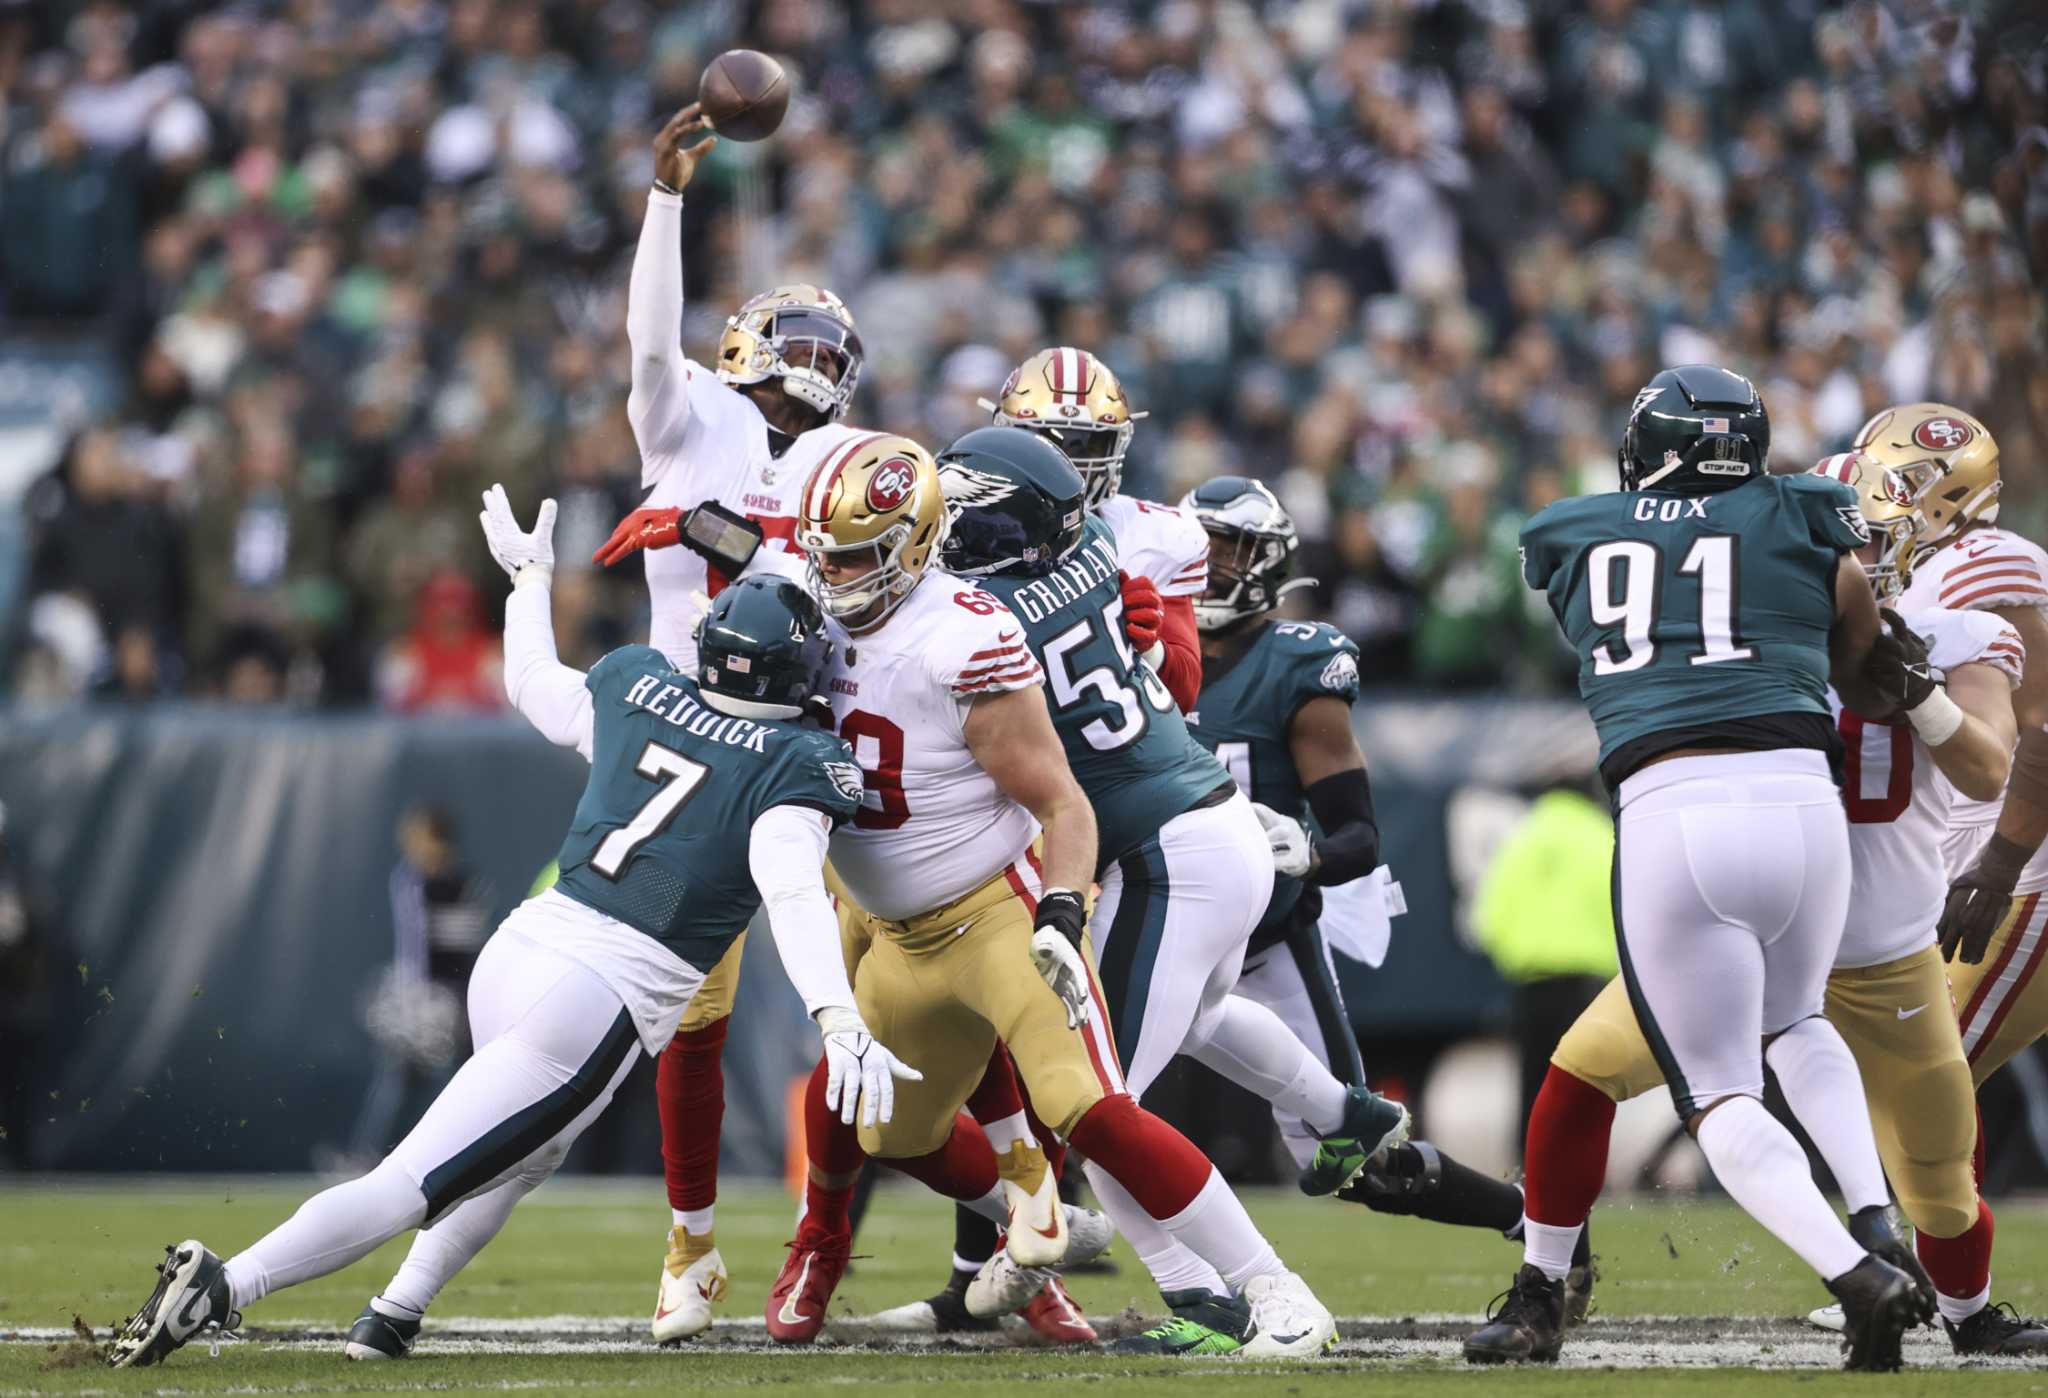 NFC championship game recap: Eagles crush 49ers to reach Super Bowl